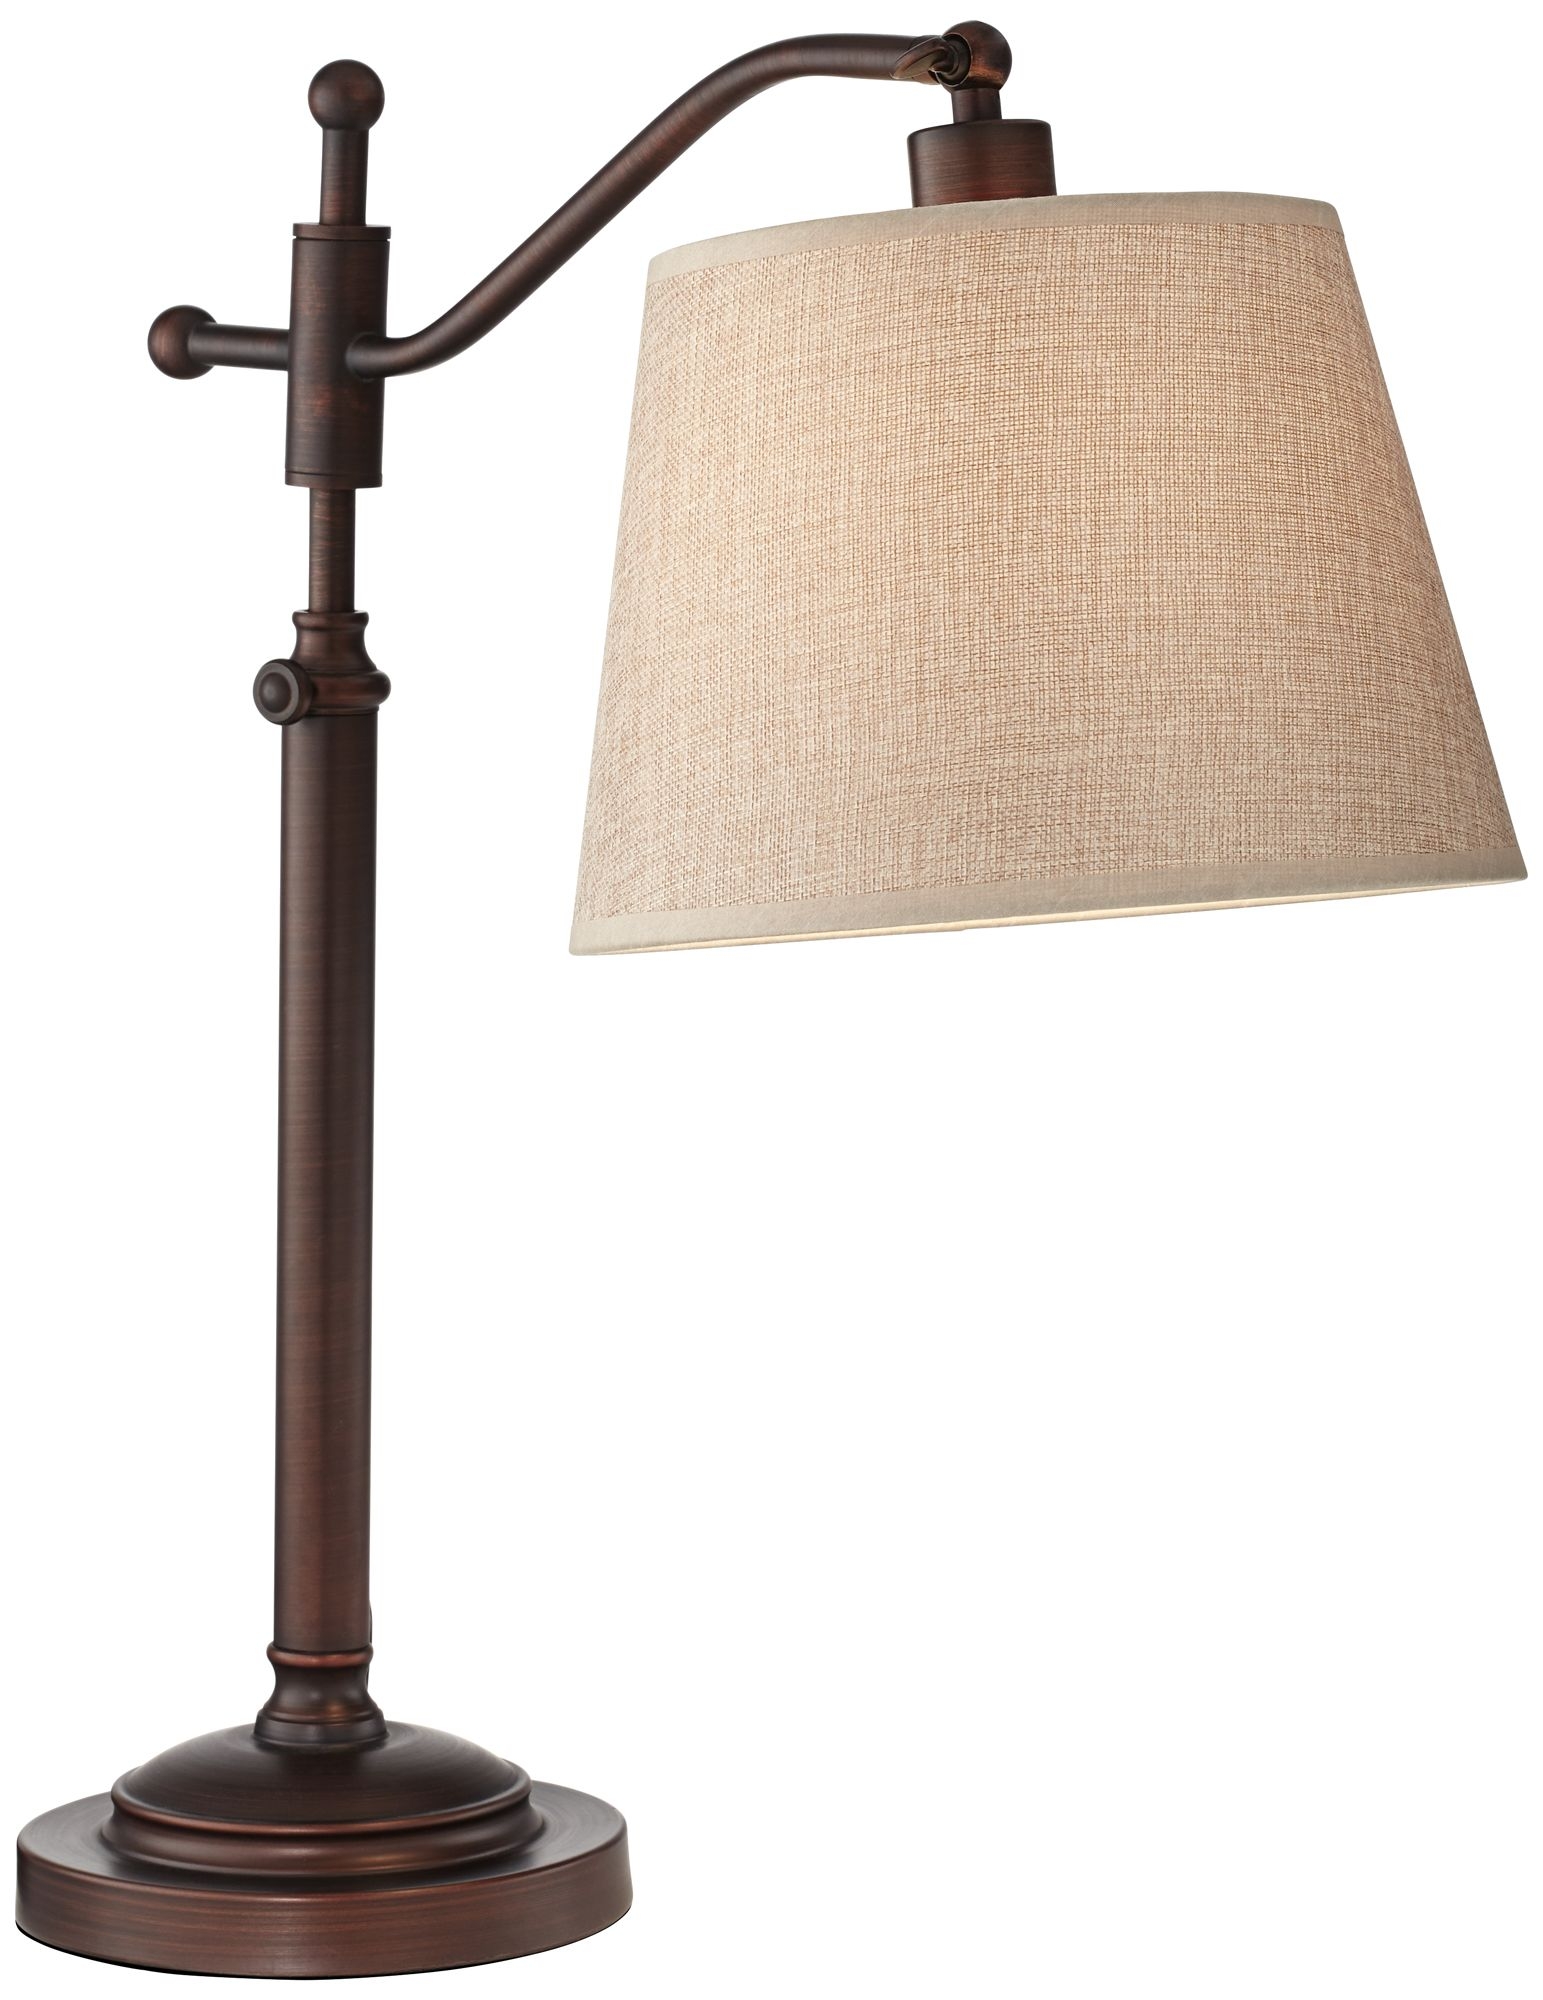 Adley Downbridge Desk Lamp - Image 0